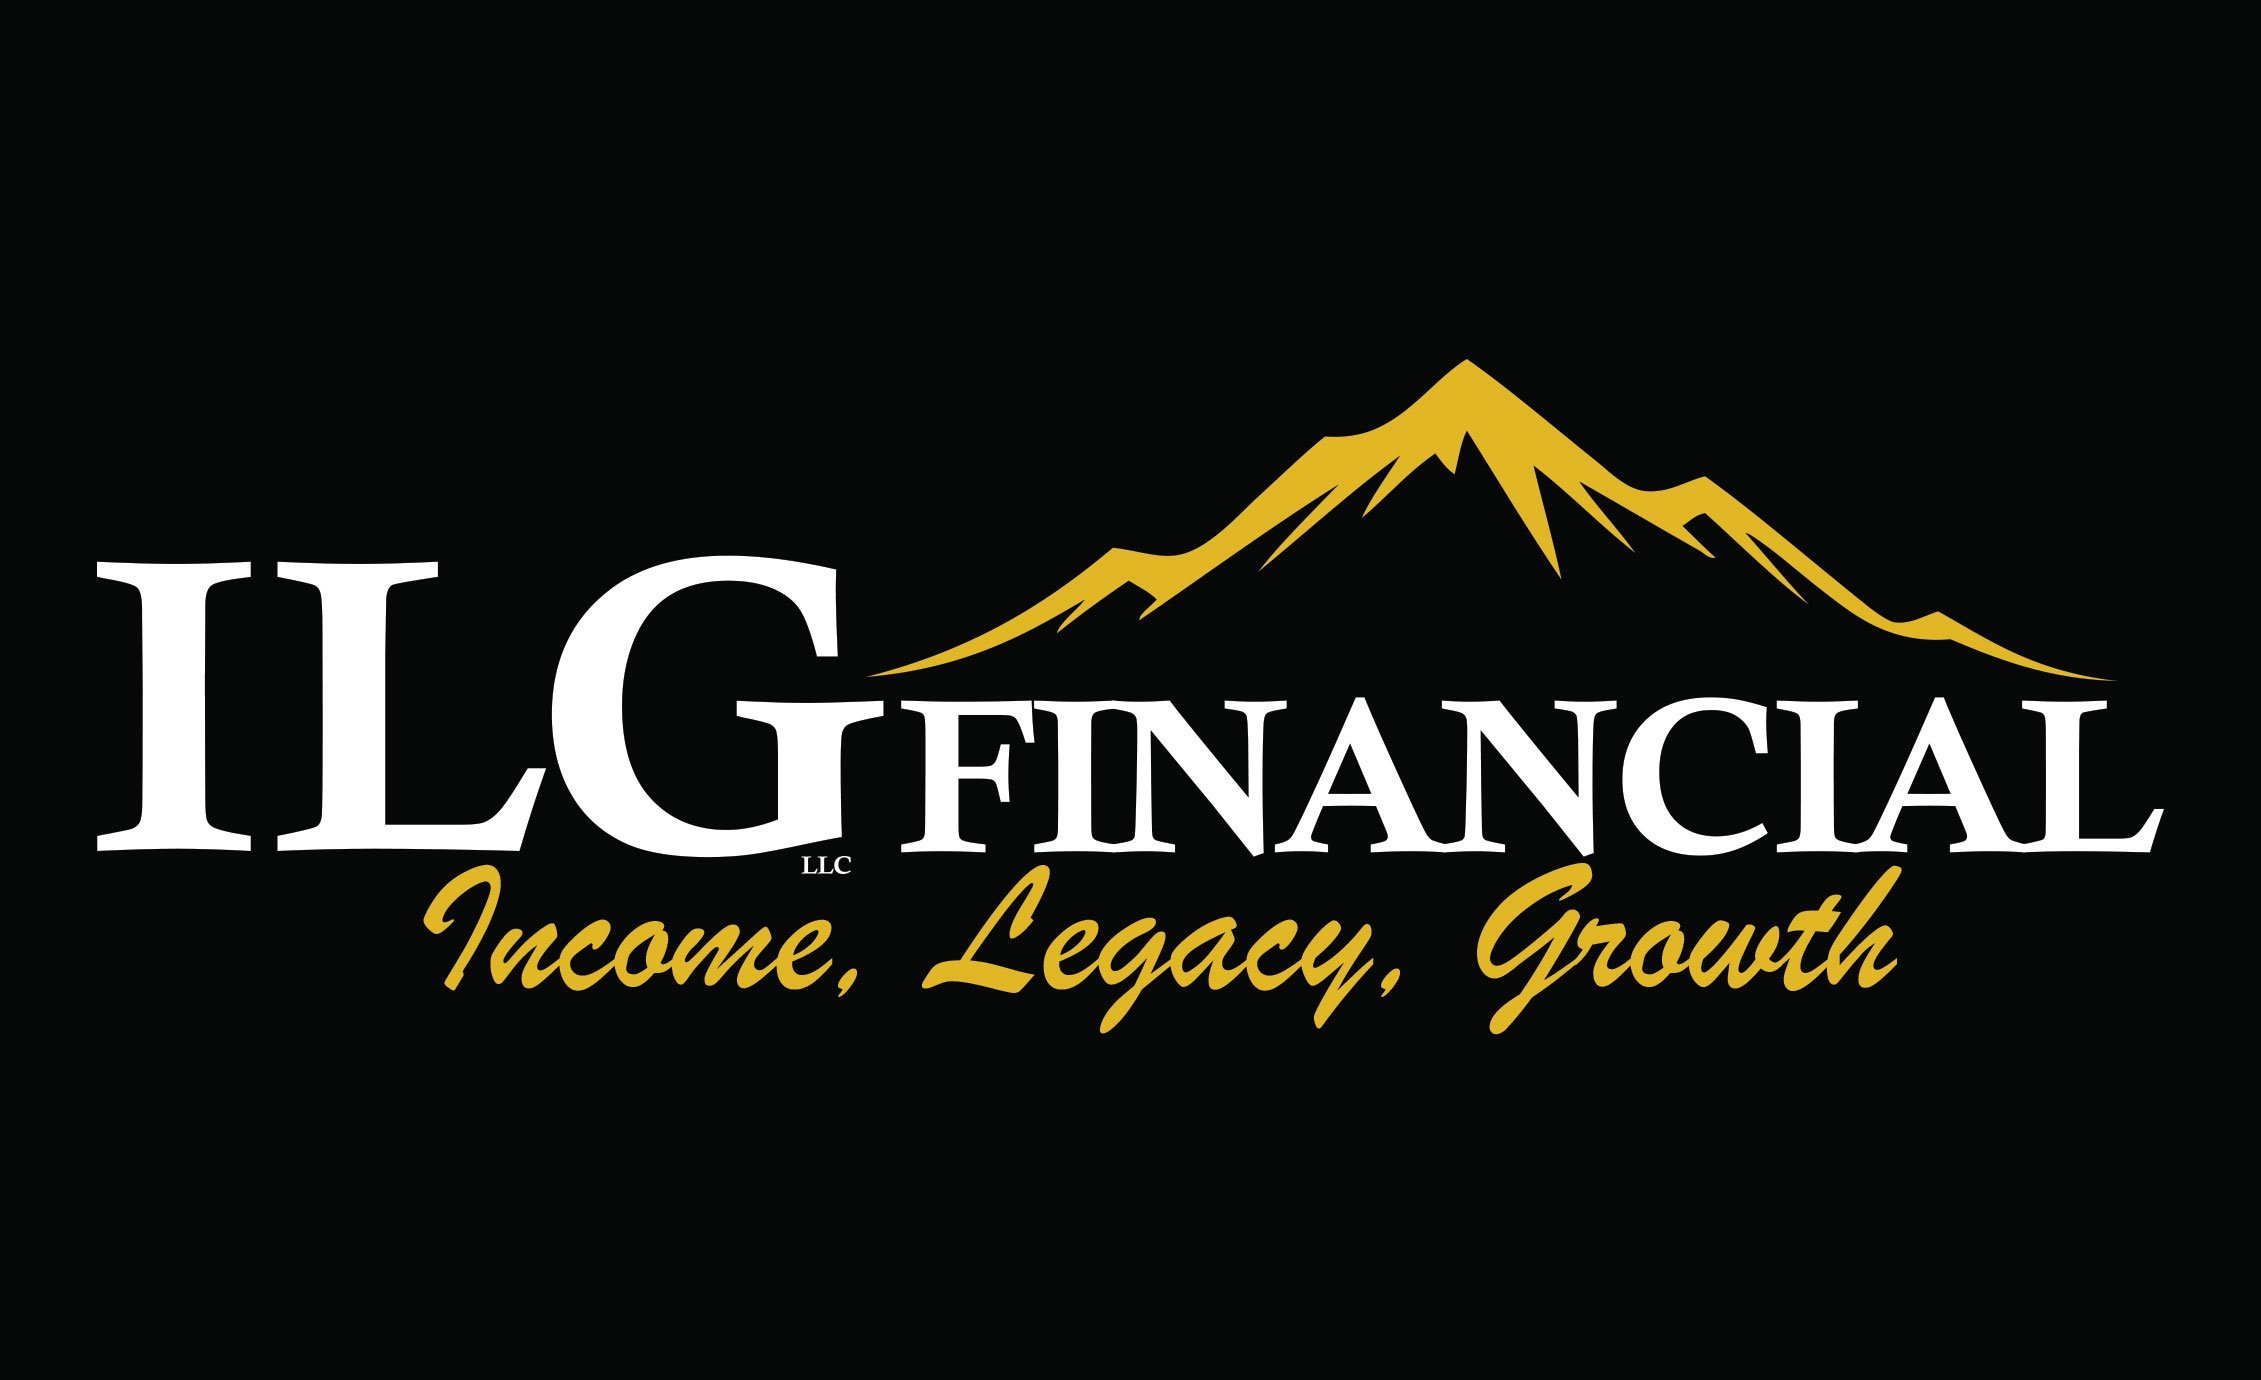 ILG Financial